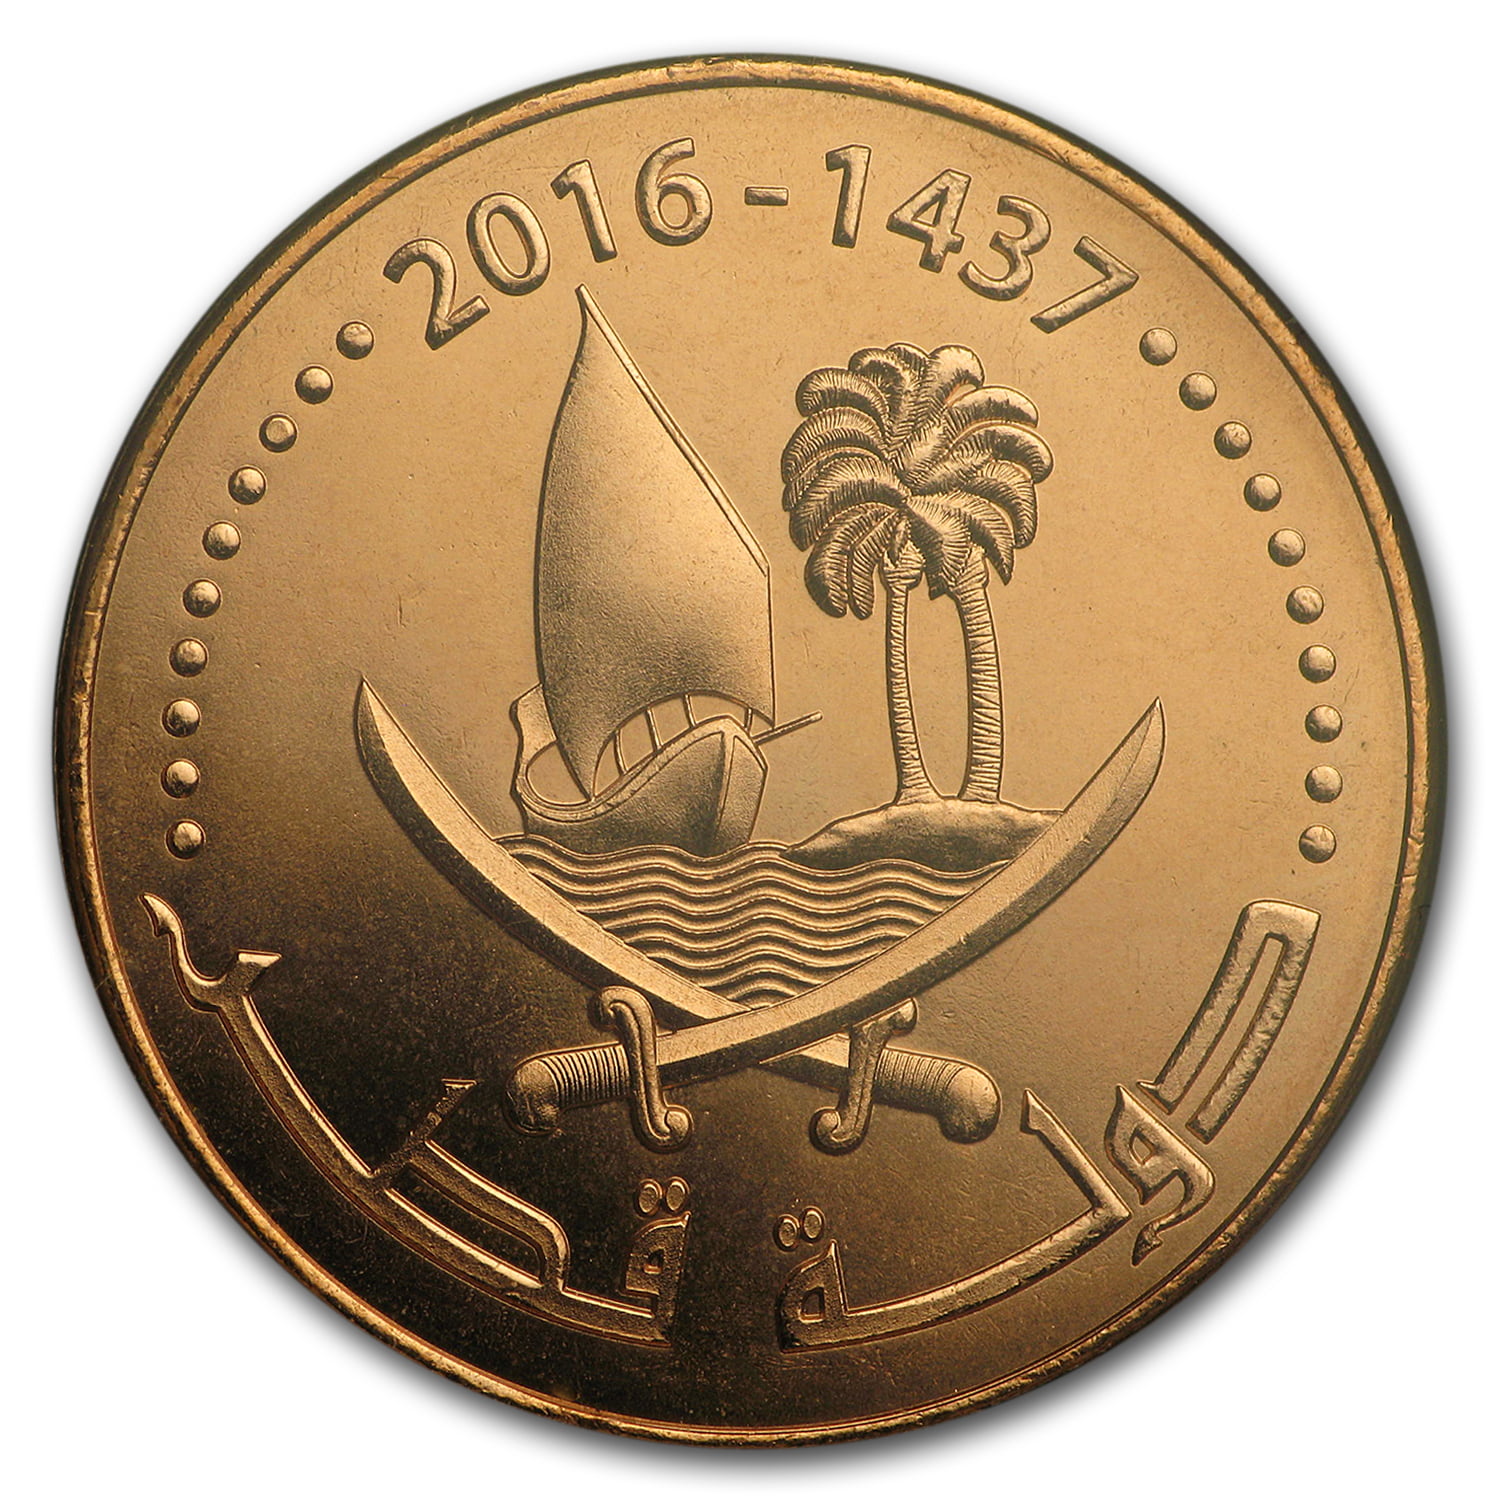 Qatar Coins. 180 000 000 дирхам в рубли